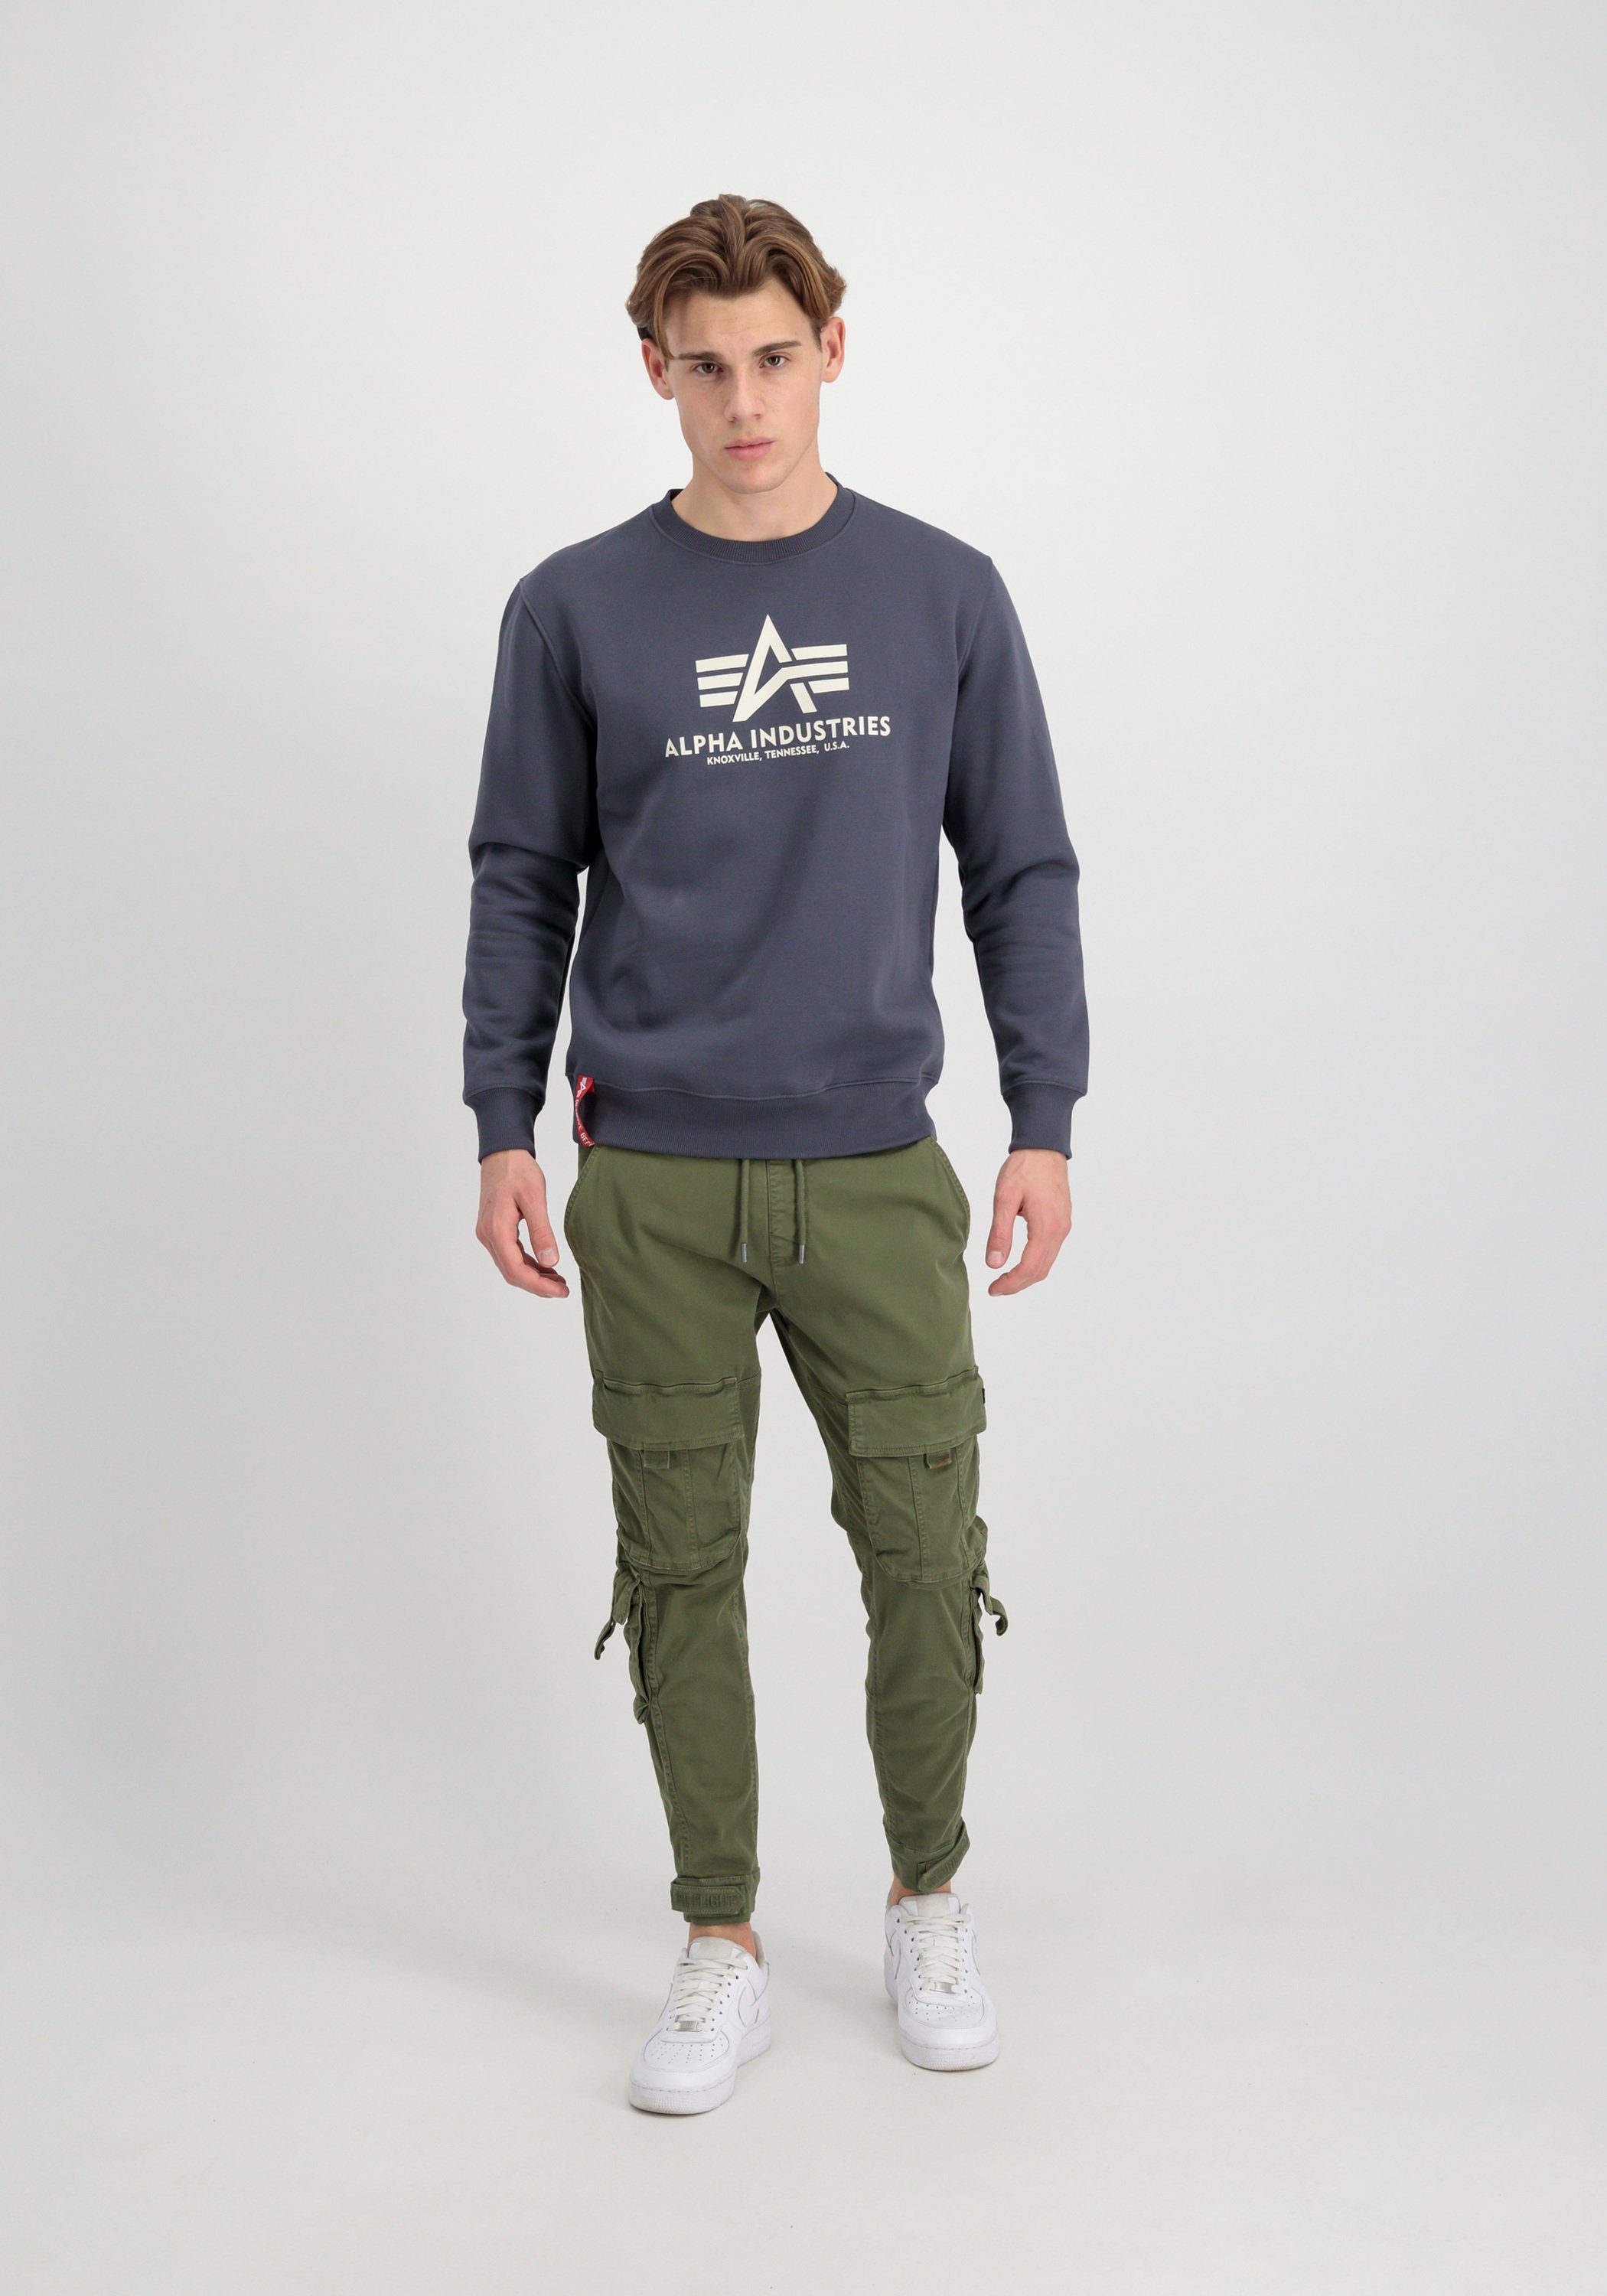 Sweatshirts greyblack Industries - Sweater Industries Alpha Alpha Sweater Men Basic